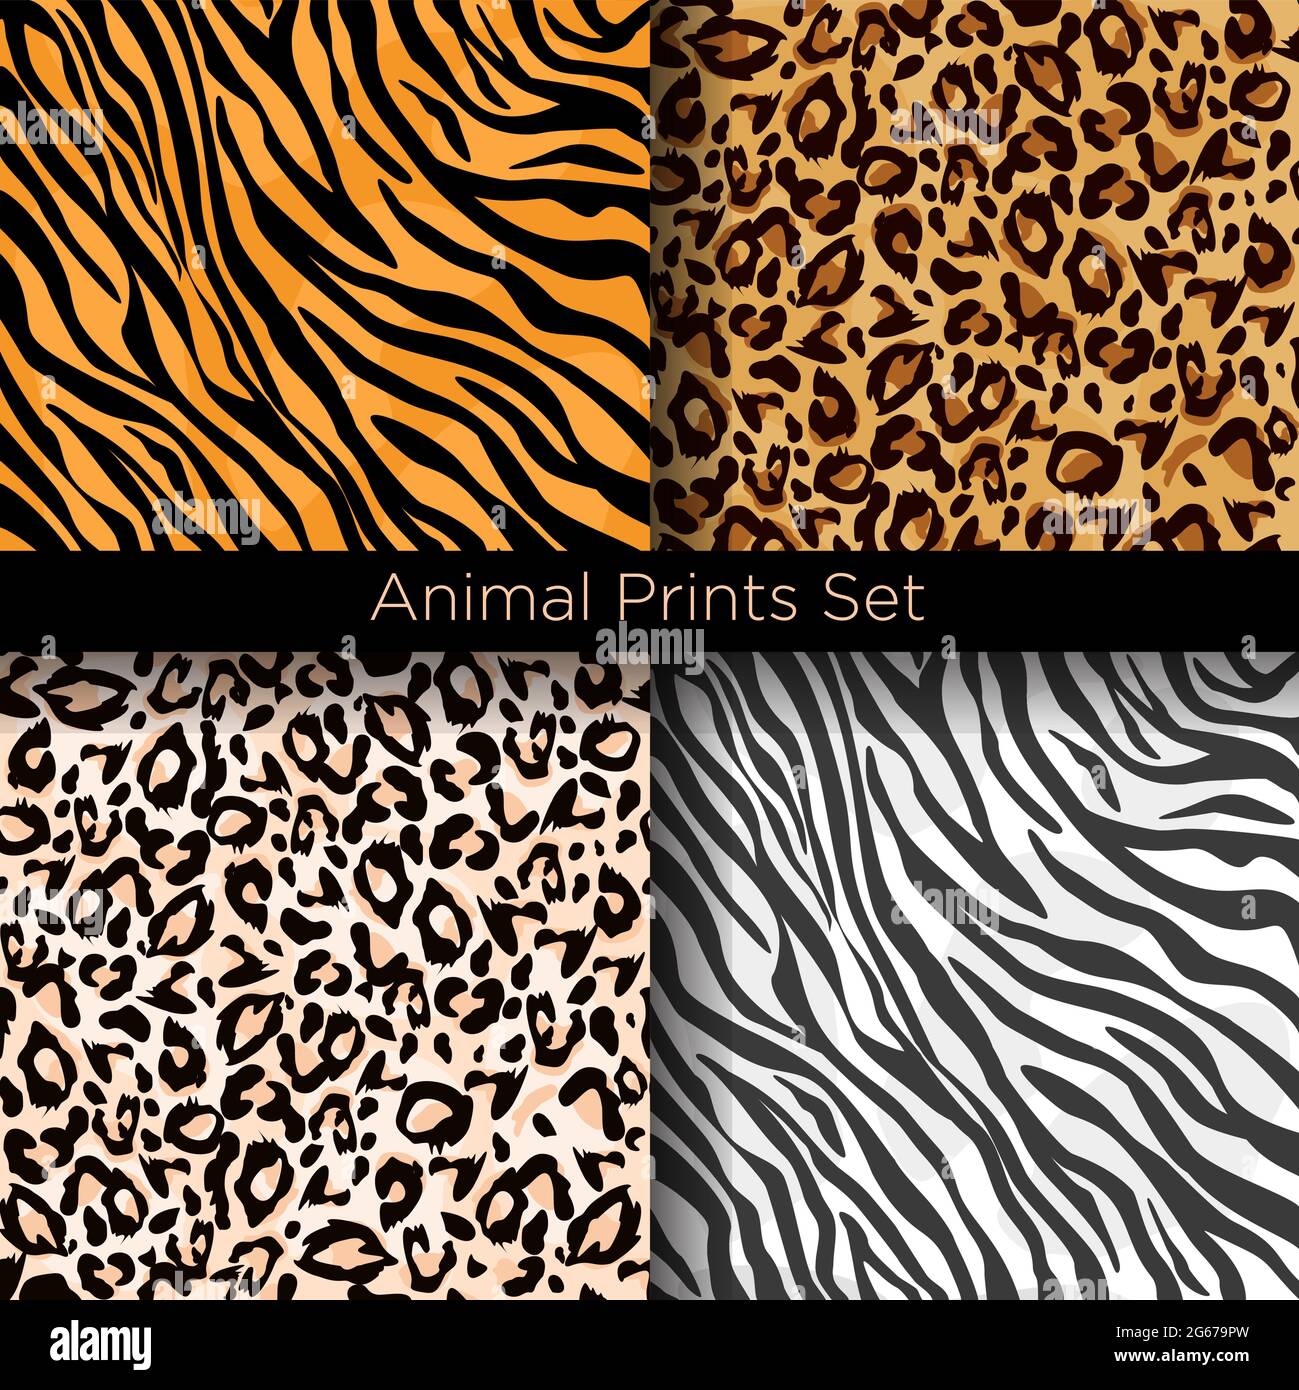 Vector illustration set of four different seamless animal patterns. Safari textile concept. Tiger, zebra, leopard and jaguar skin seamless patterns in Stock Vector